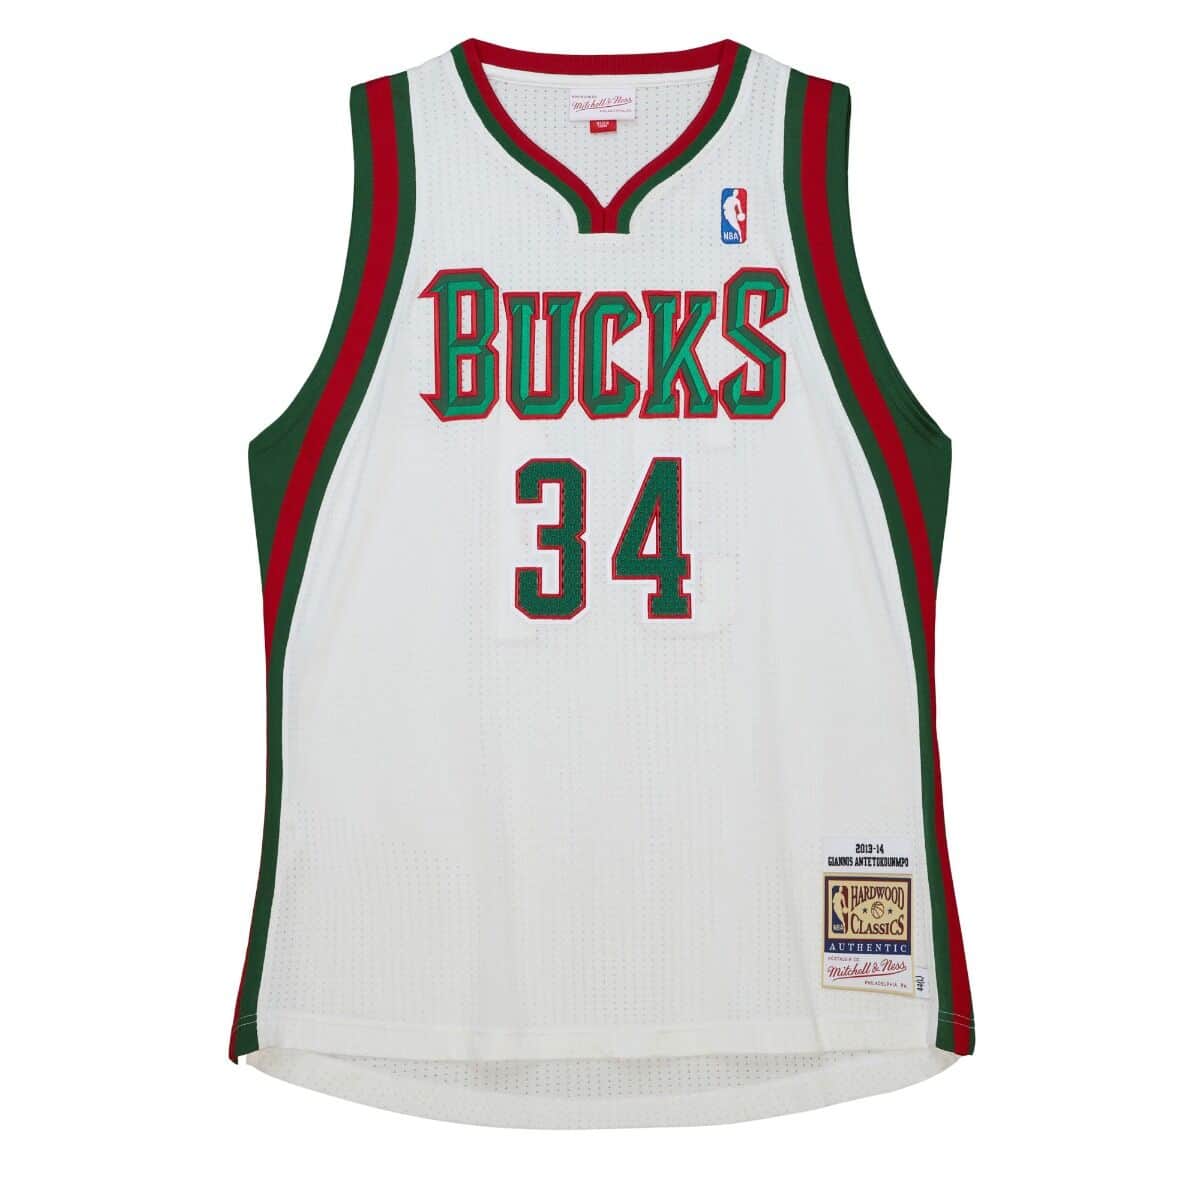 Milwaukee Bucks Green #34 Giannis Antetokounmpo Earned Edition Stitched NBA  Jersey